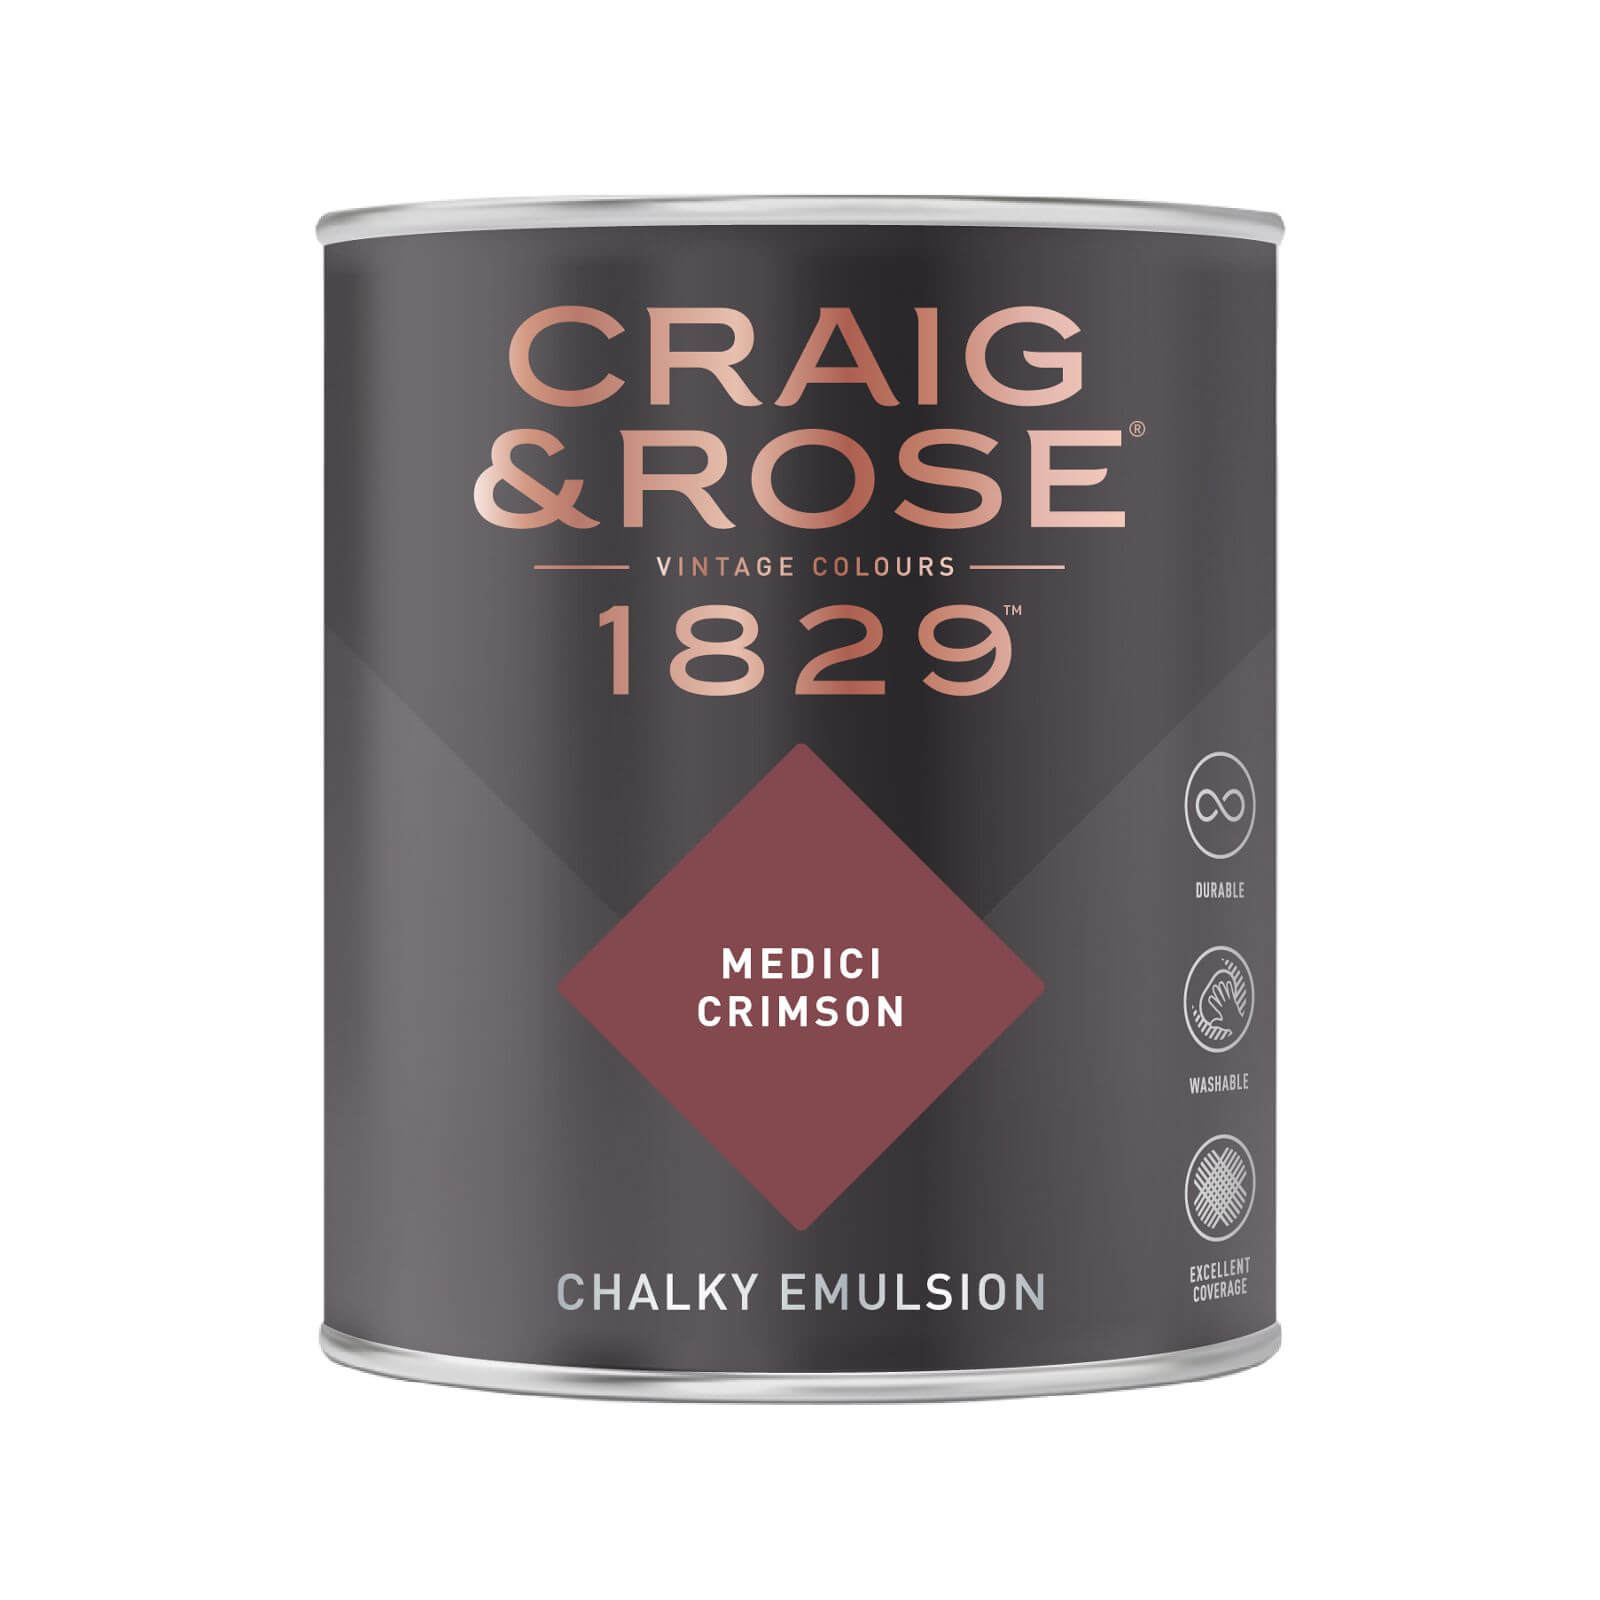 Craig & Rose 1829 Chalky Emulsion Paint Medici Crimson - 750ml